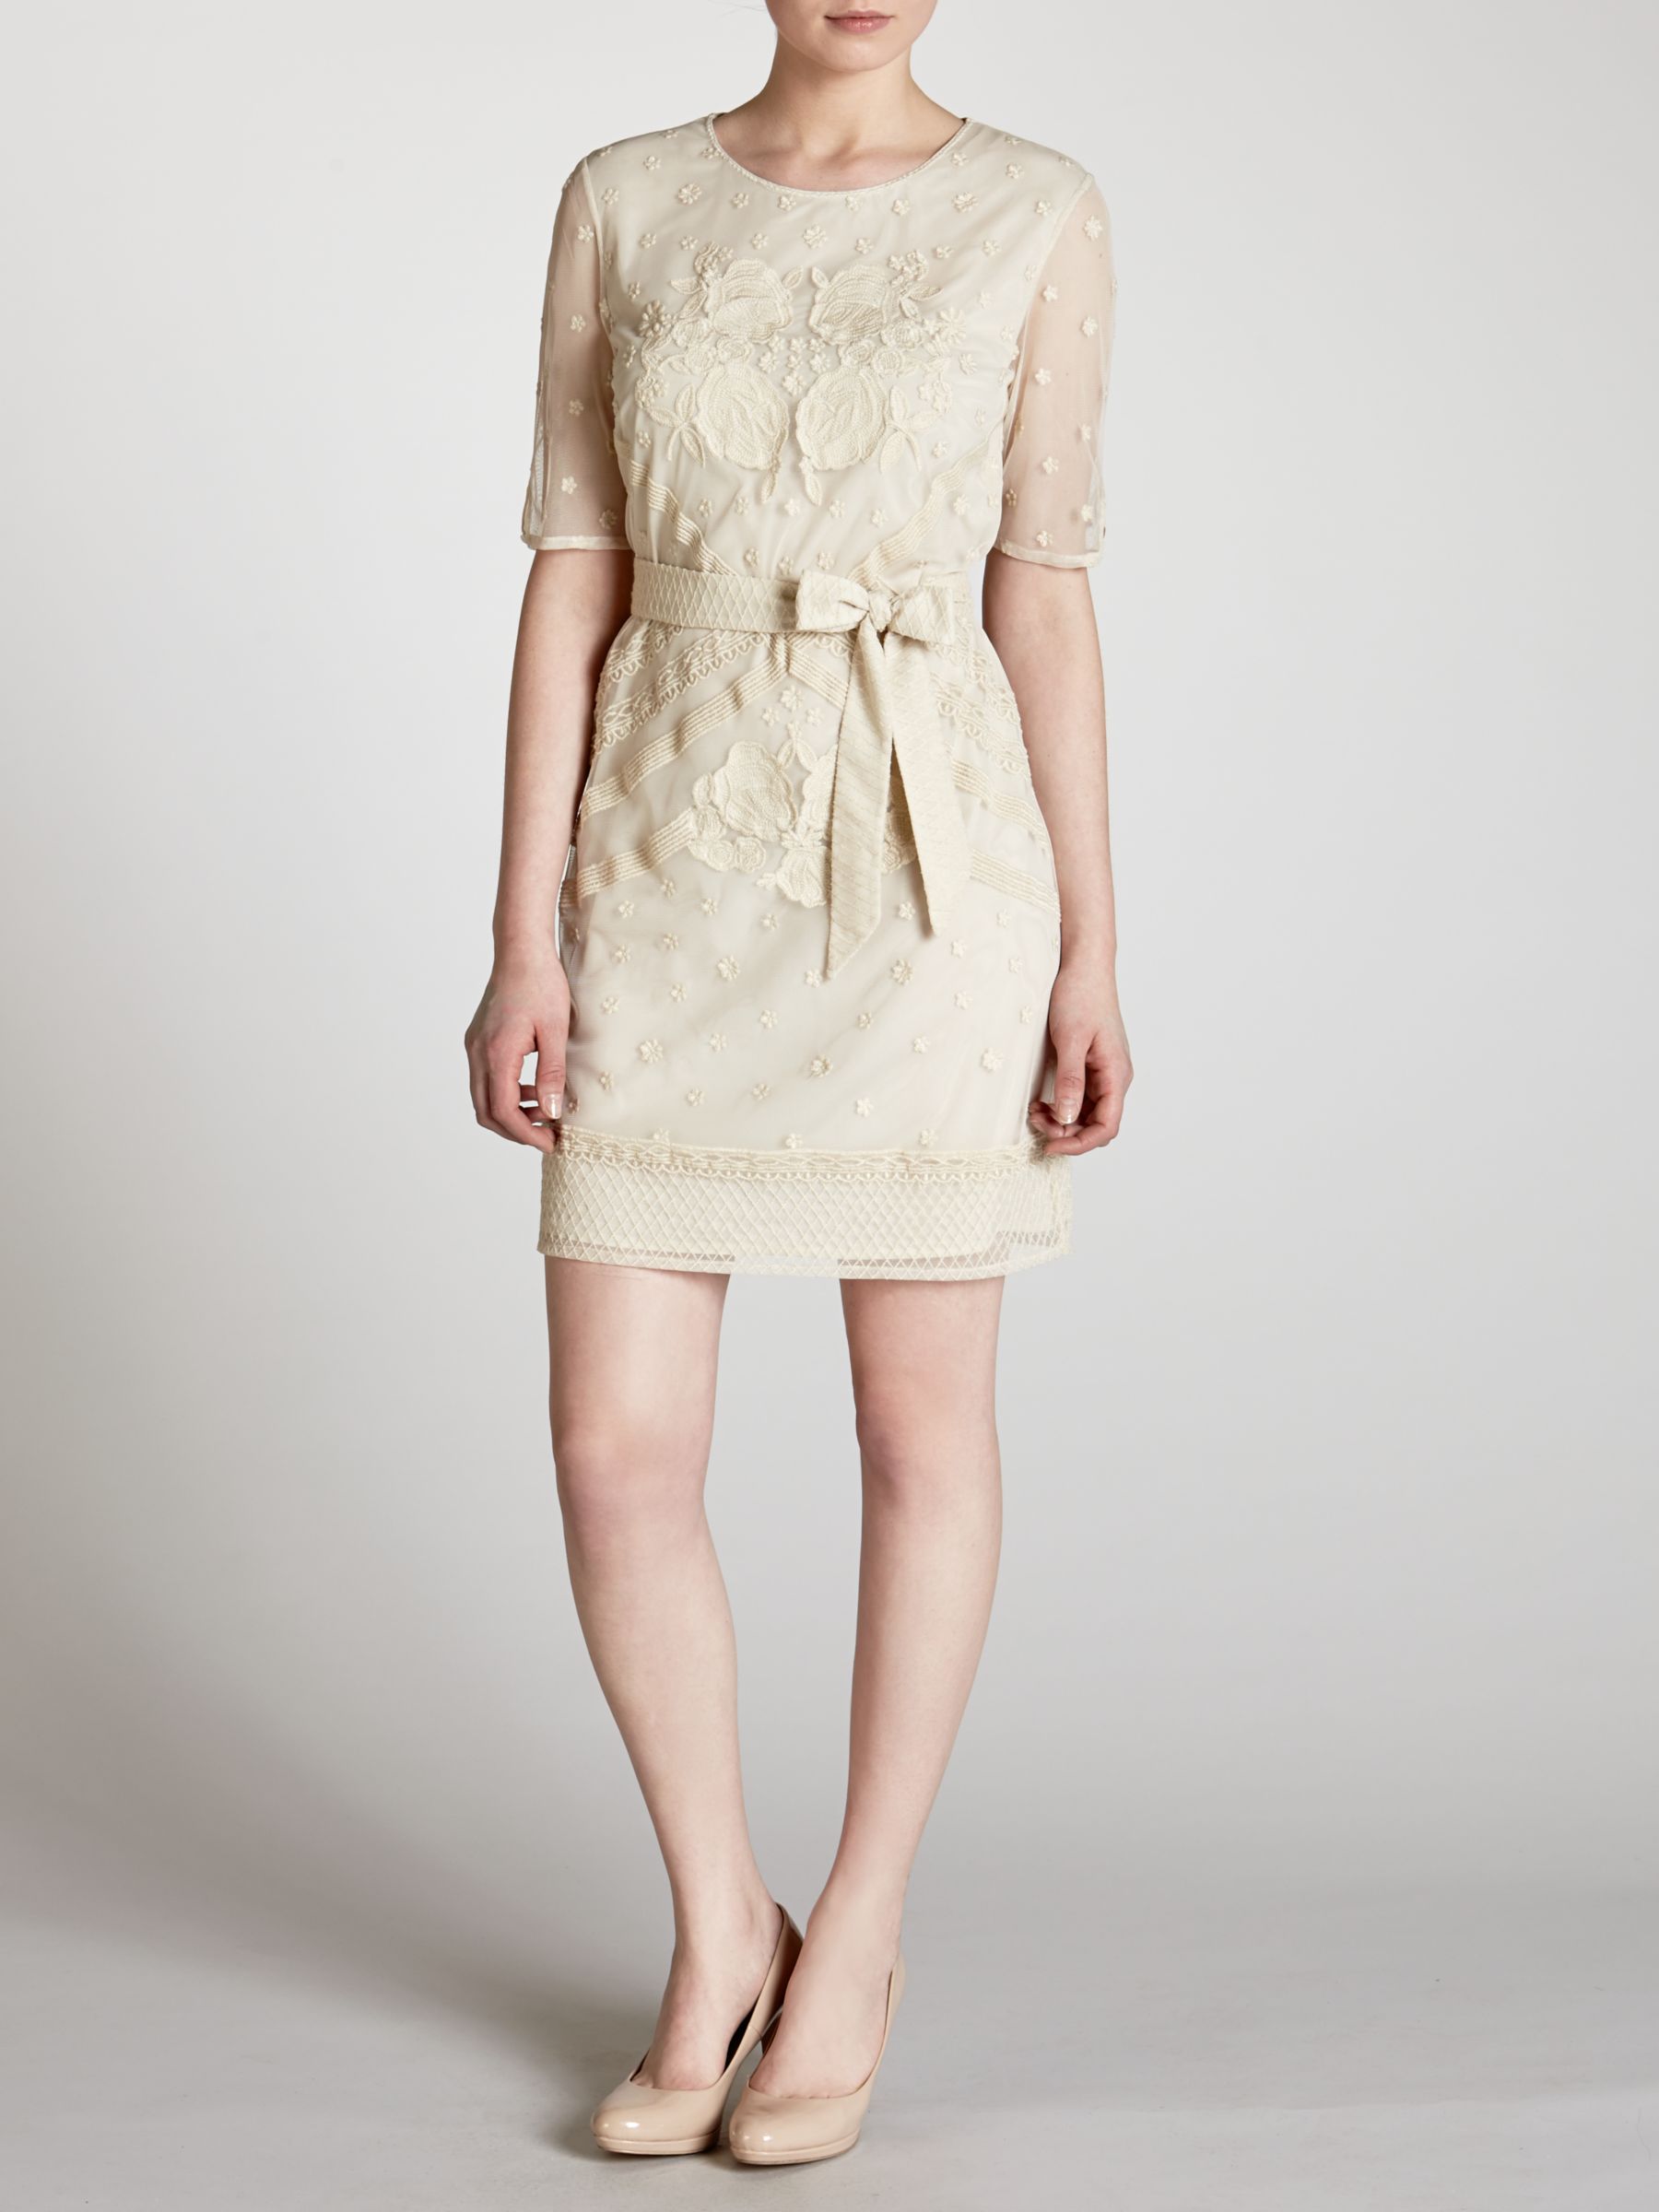 Hoss Intropia Lace Dress, Ivory at John Lewis & Partners